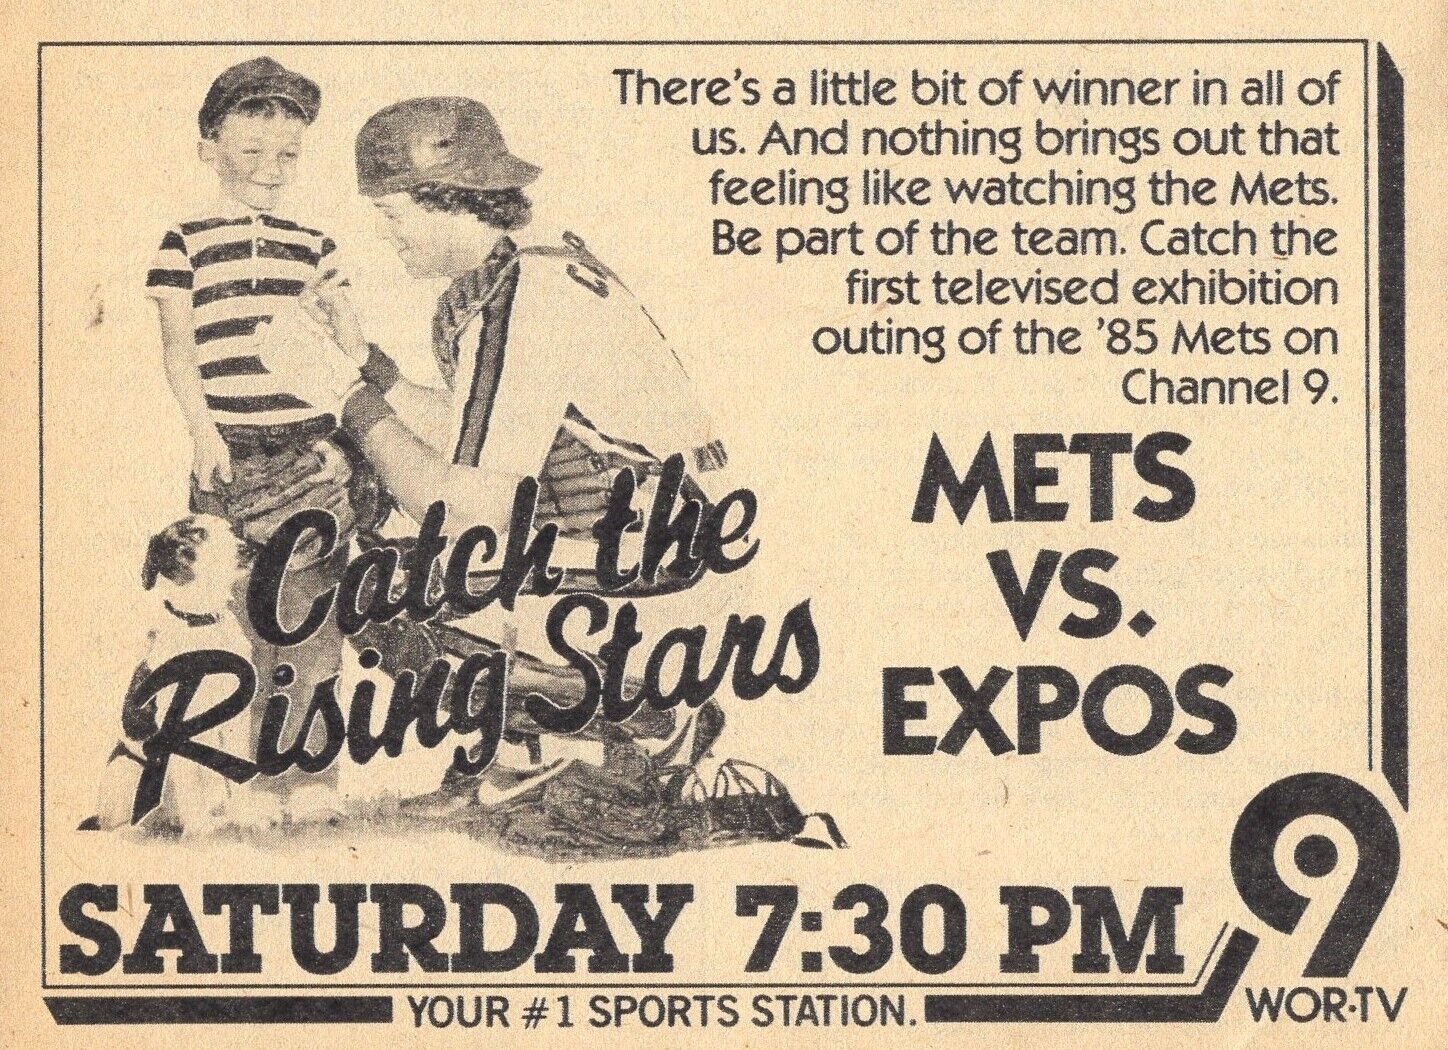 1985 WOR TV AD NEW YORK METS BASEBALL GARY CARTER HALL OF FAME CATCHER VS EXPOS